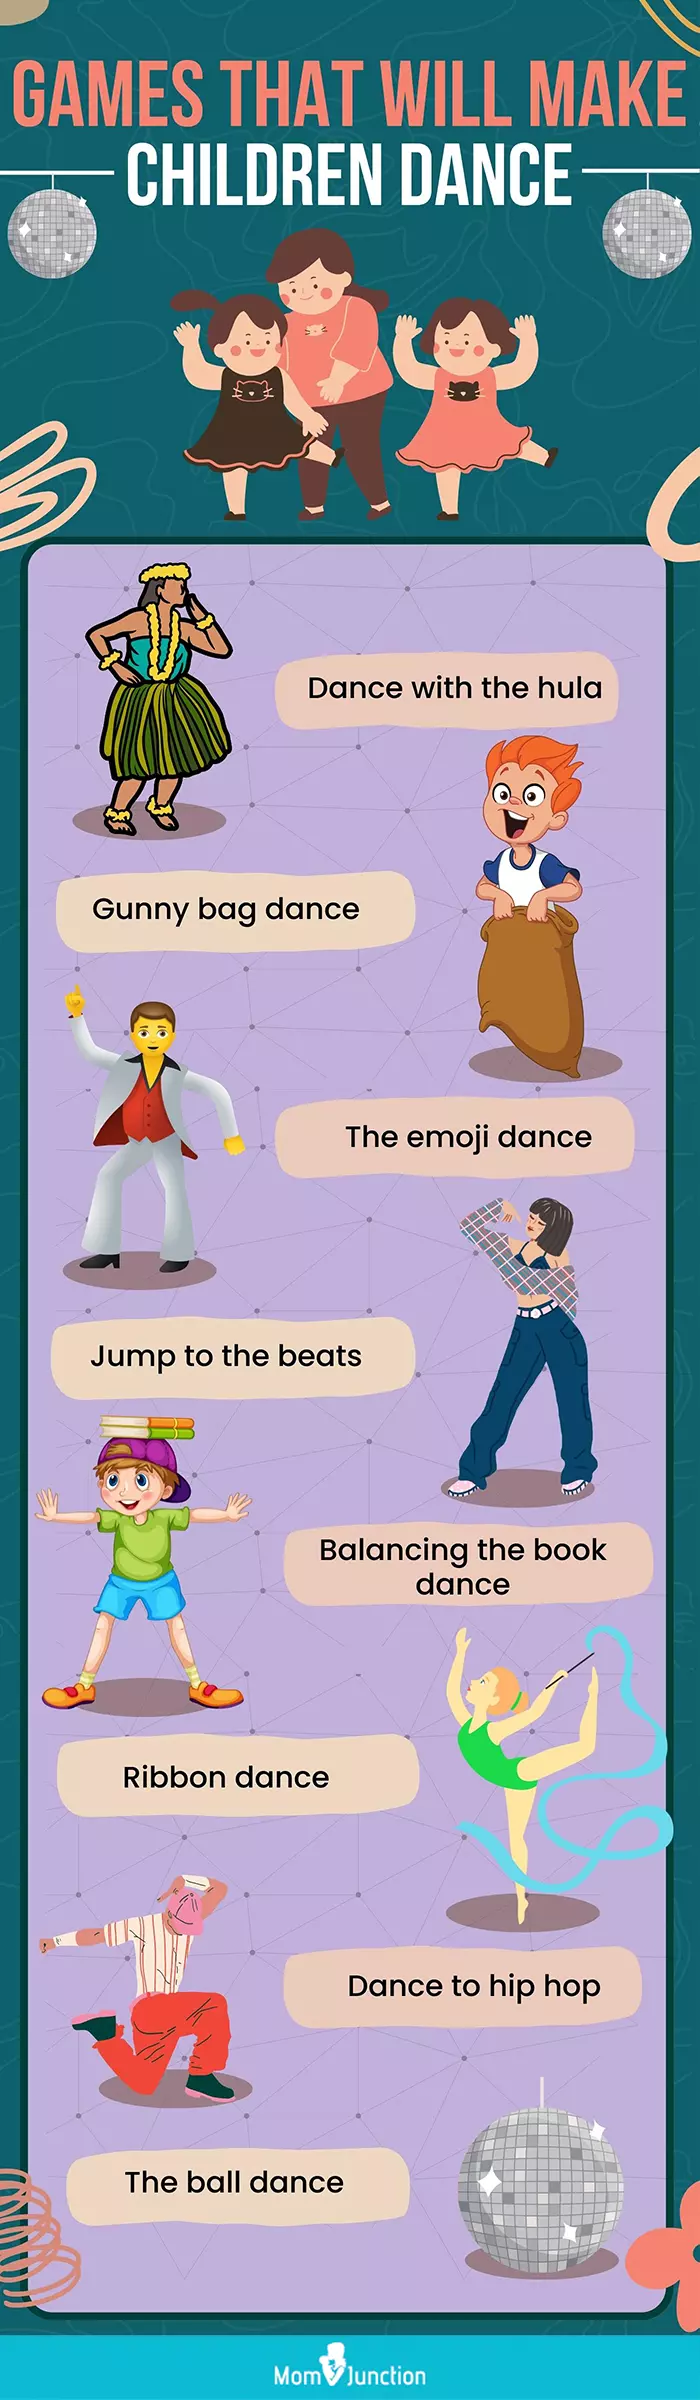 games that will make children dance (infographic)